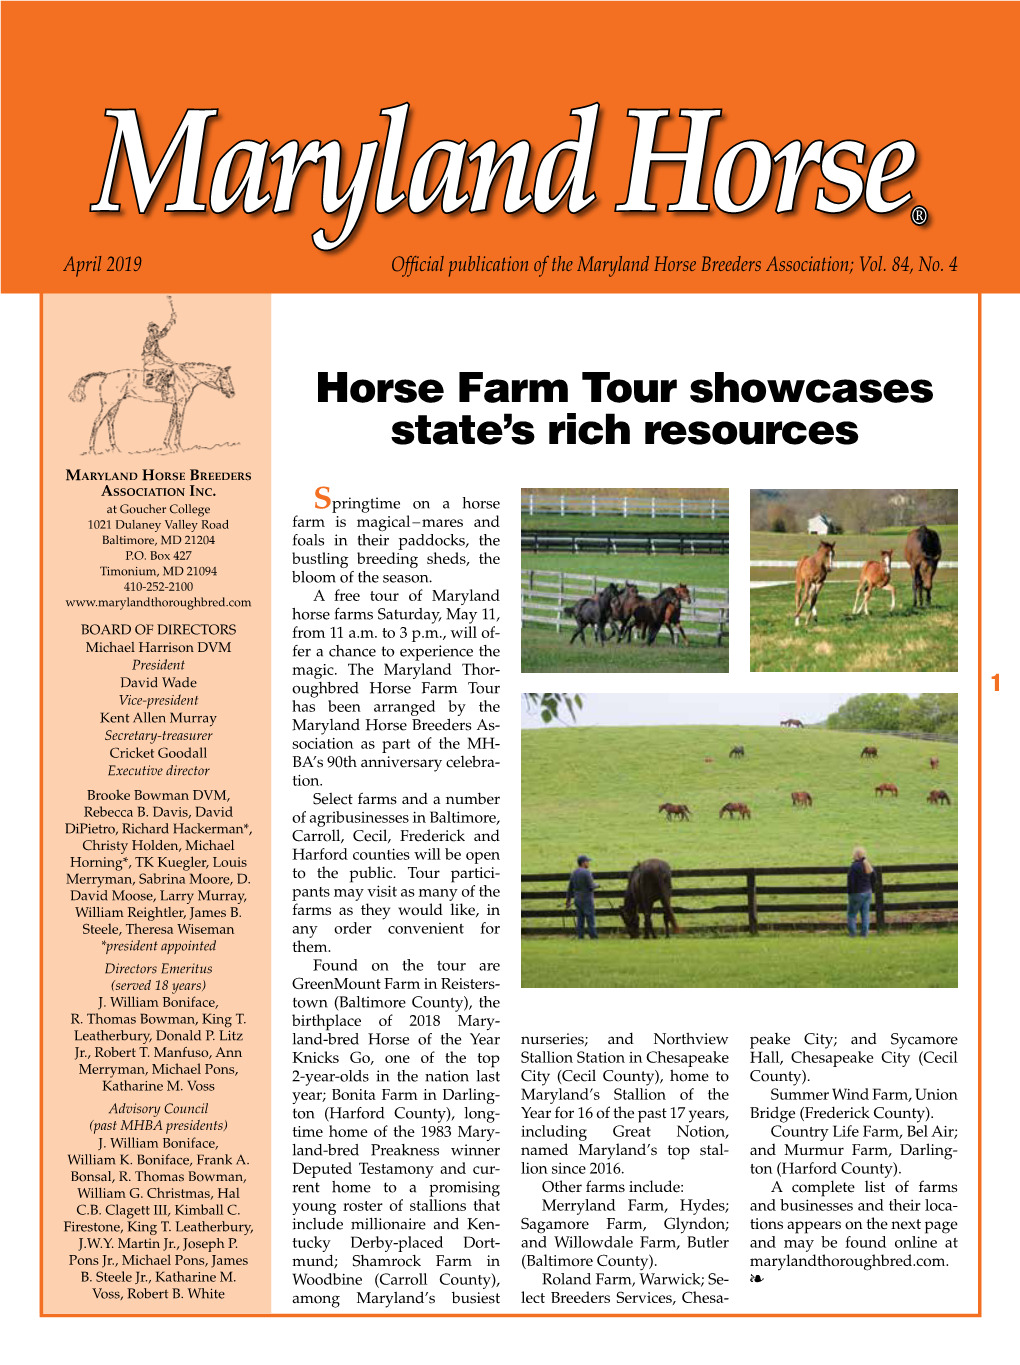 Horse Farm Tour Showcases State's Rich Resources